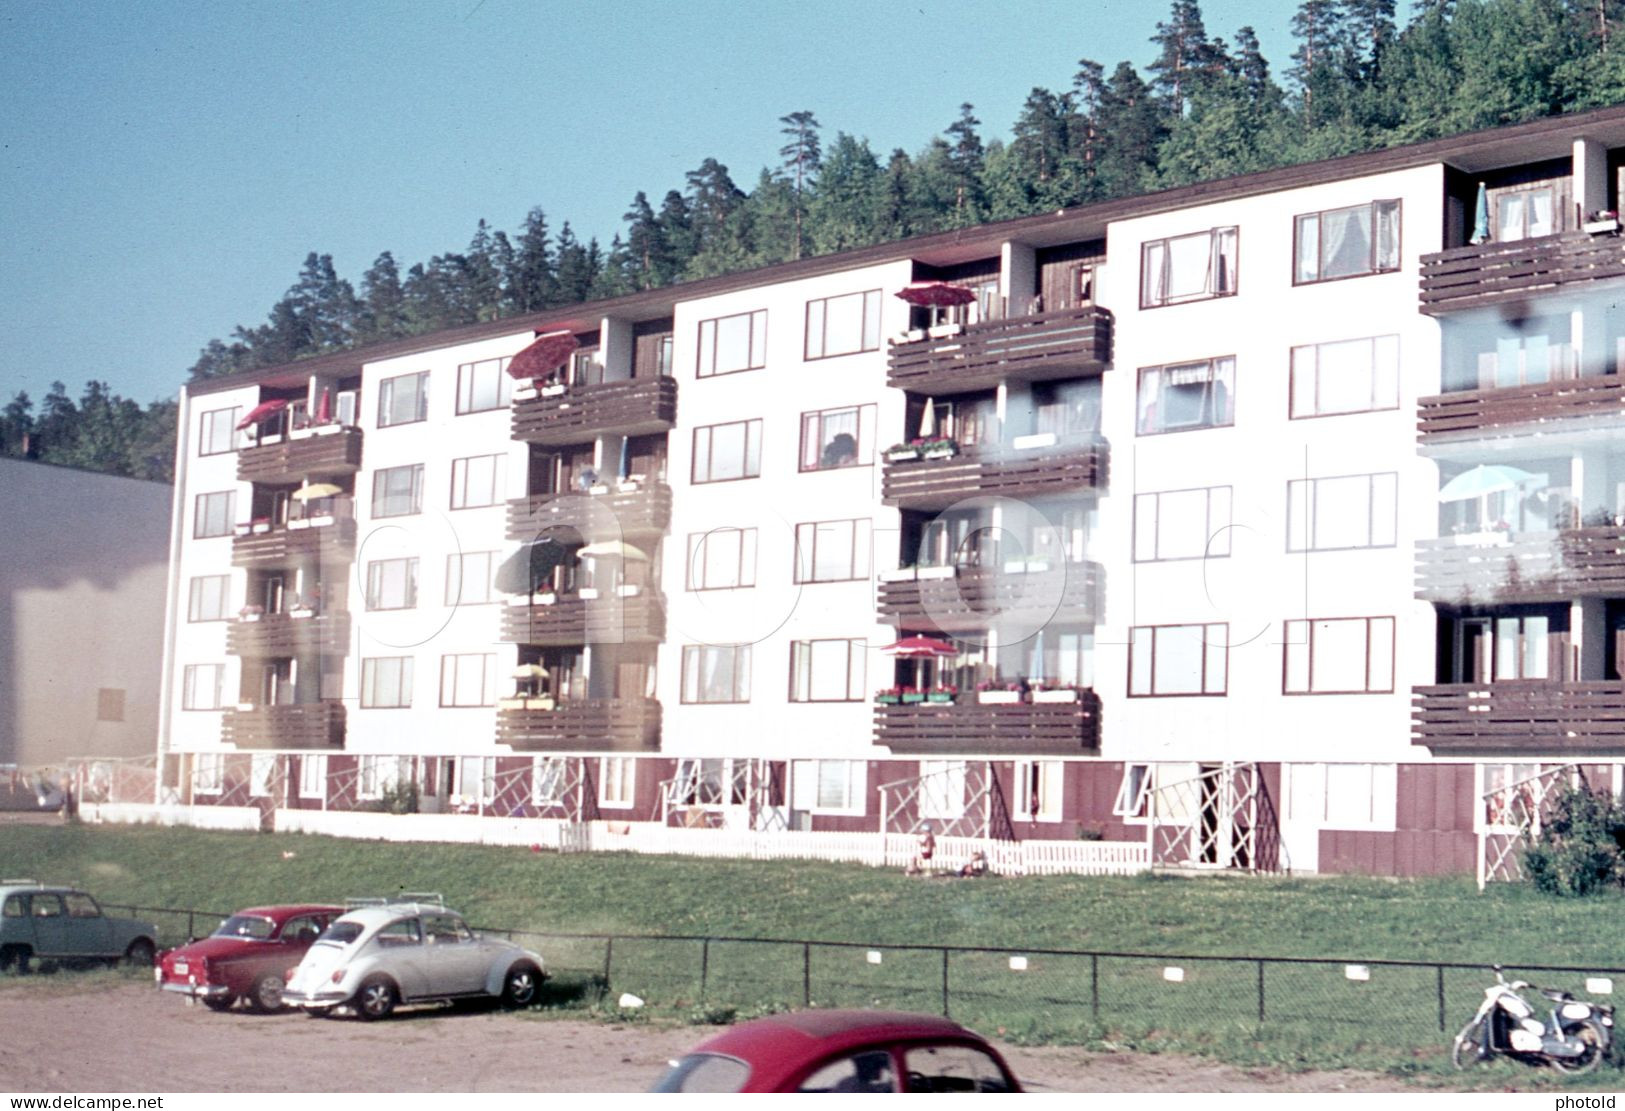 12 SLIDES SET 1977 OSLO NORWAY NORGE AMATEUR 35mm SLIDE PHOTO 35mm DIAPOSITIVE SLIDE Not PHOTO No FOTO NB4105 - Diapositives (slides)